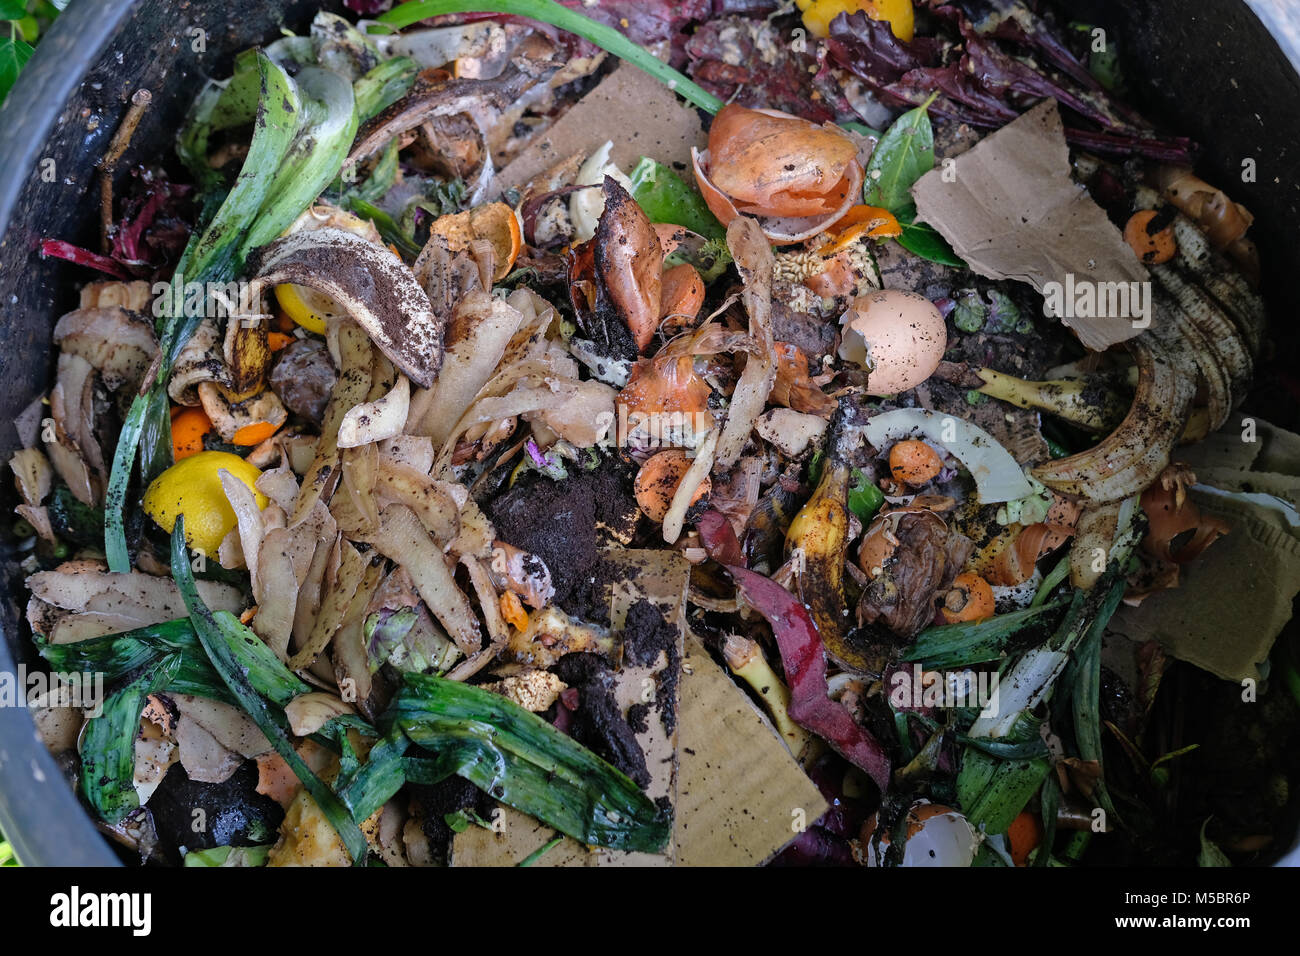 Kompost bin. Stockfoto